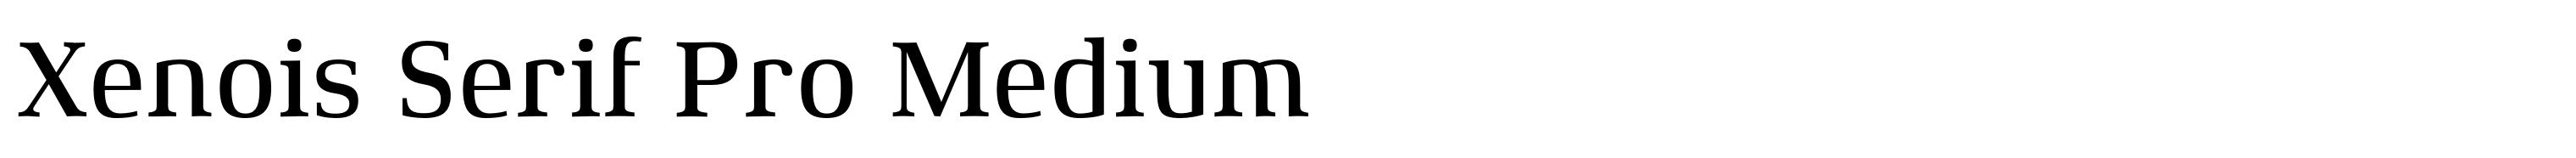 Xenois Serif Pro Medium